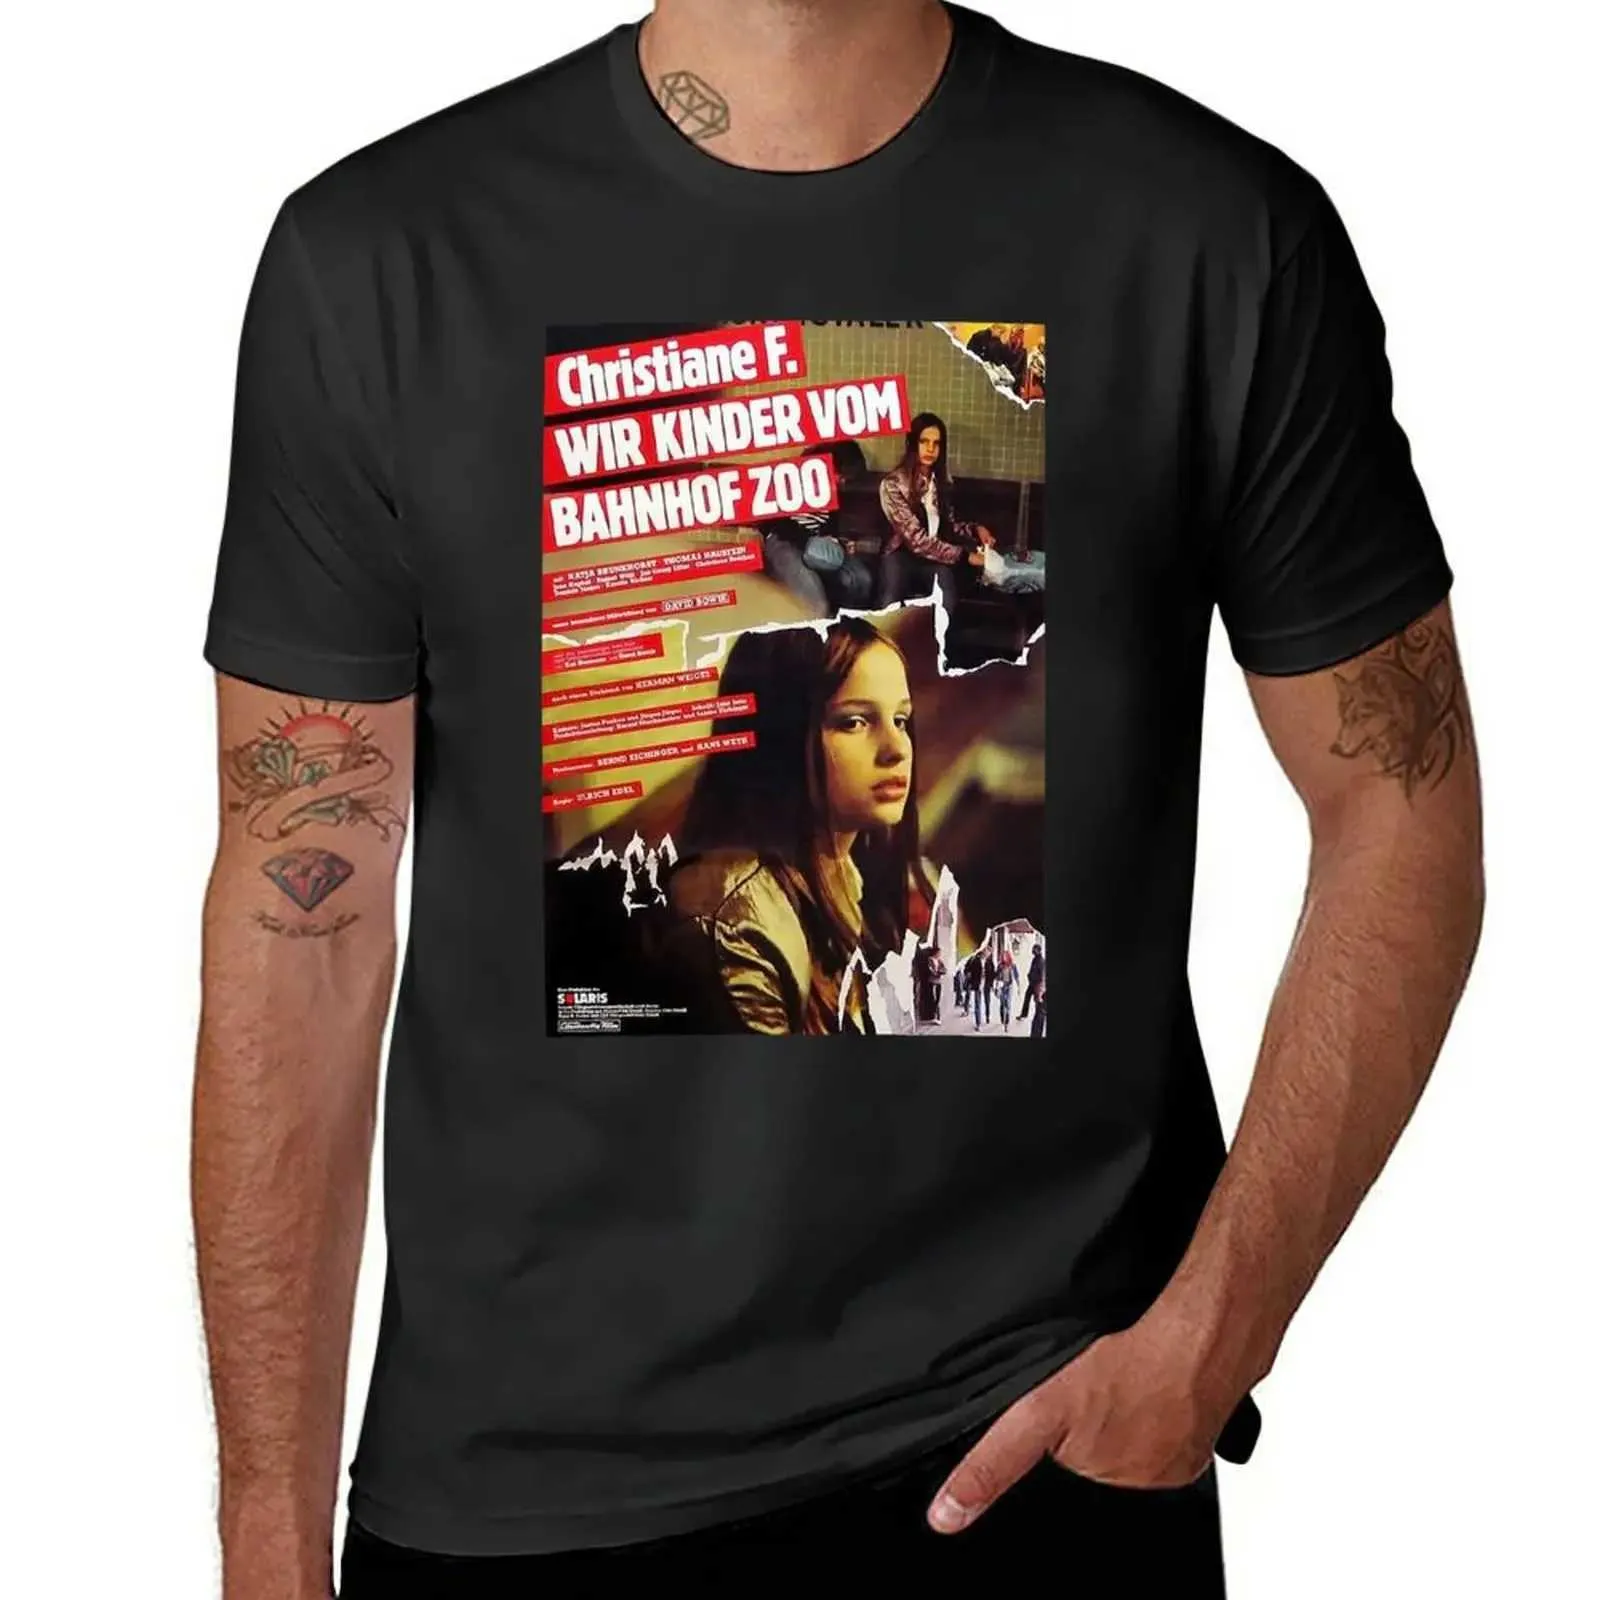 Men's T-Shirts WIR KINDER VOM BAHNHOF ZOO Christian F. T-shirt Solid animal print mens summer topL2403